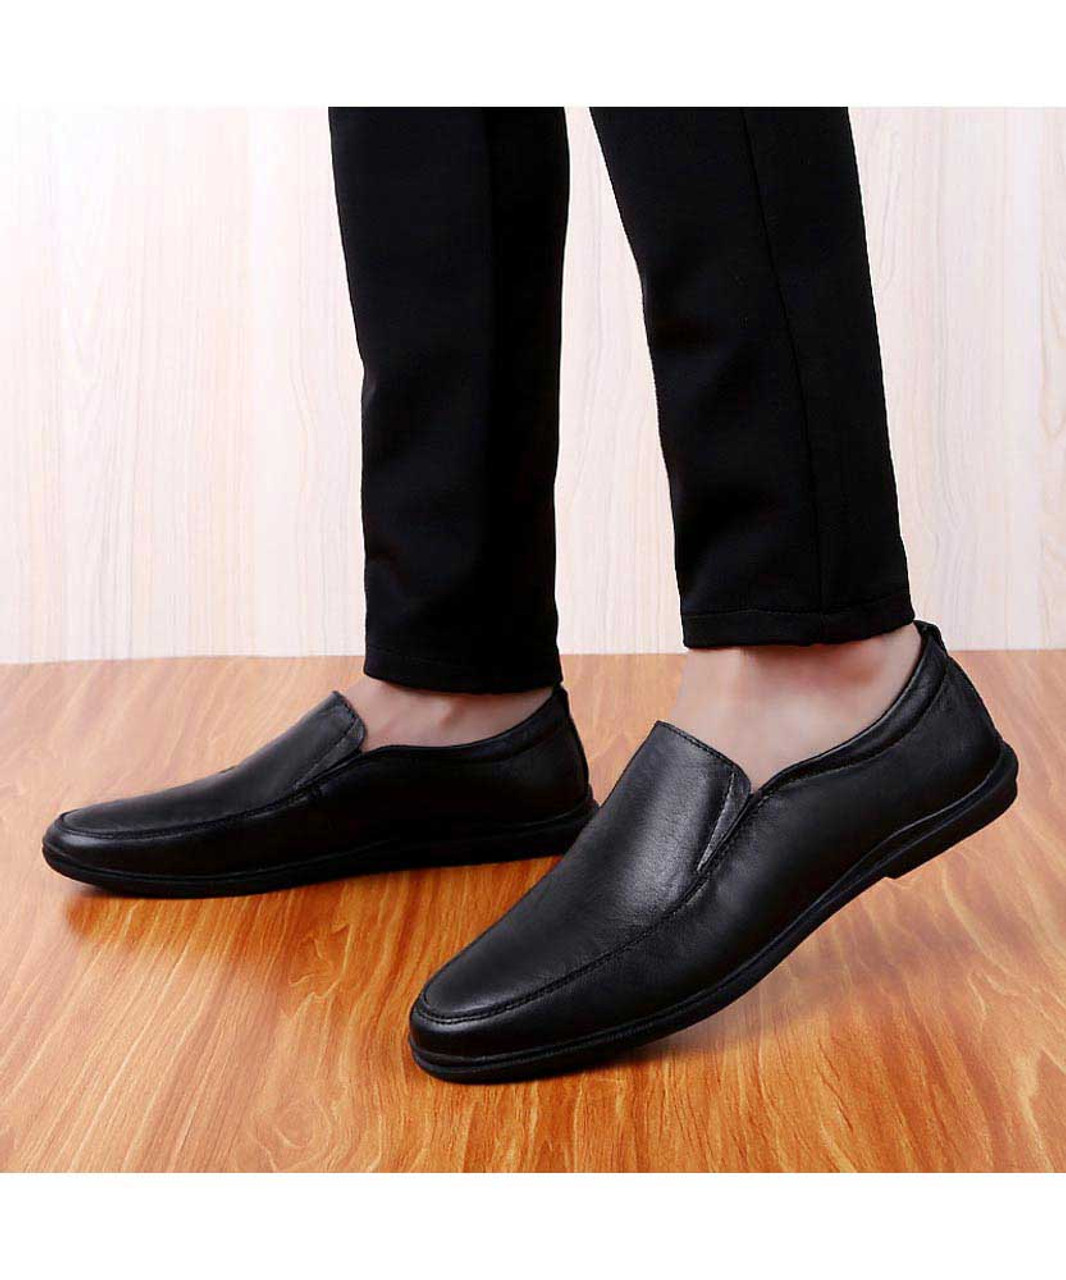 Black plain leather slip on shoe loafer curved toe | Mens shoe loafers ...